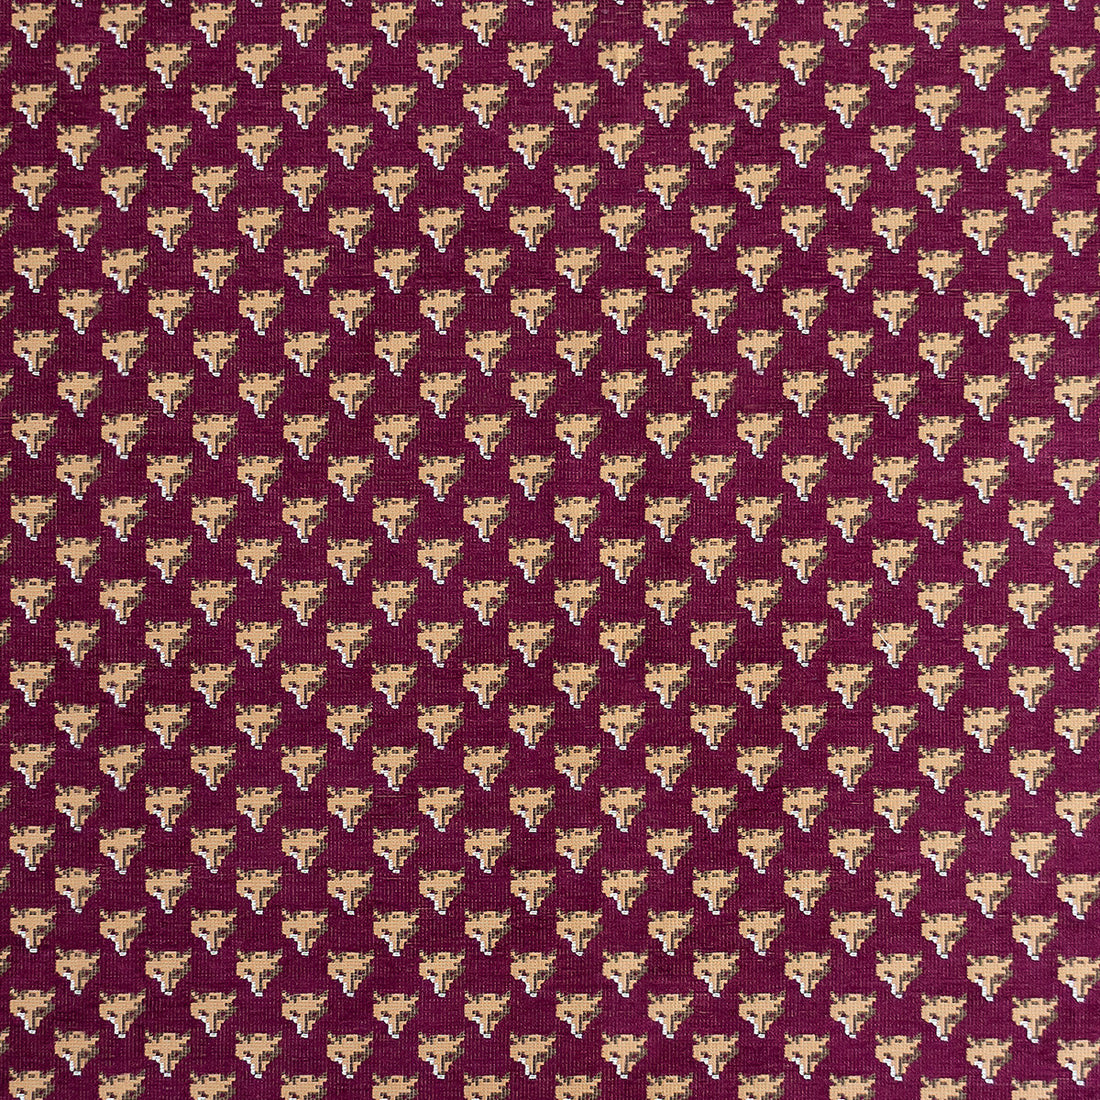 Raposu fabric in burdeos color - pattern LCT1077.005.0 - by Gaston y Daniela in the Lorenzo Castillo VII The Rectory collection